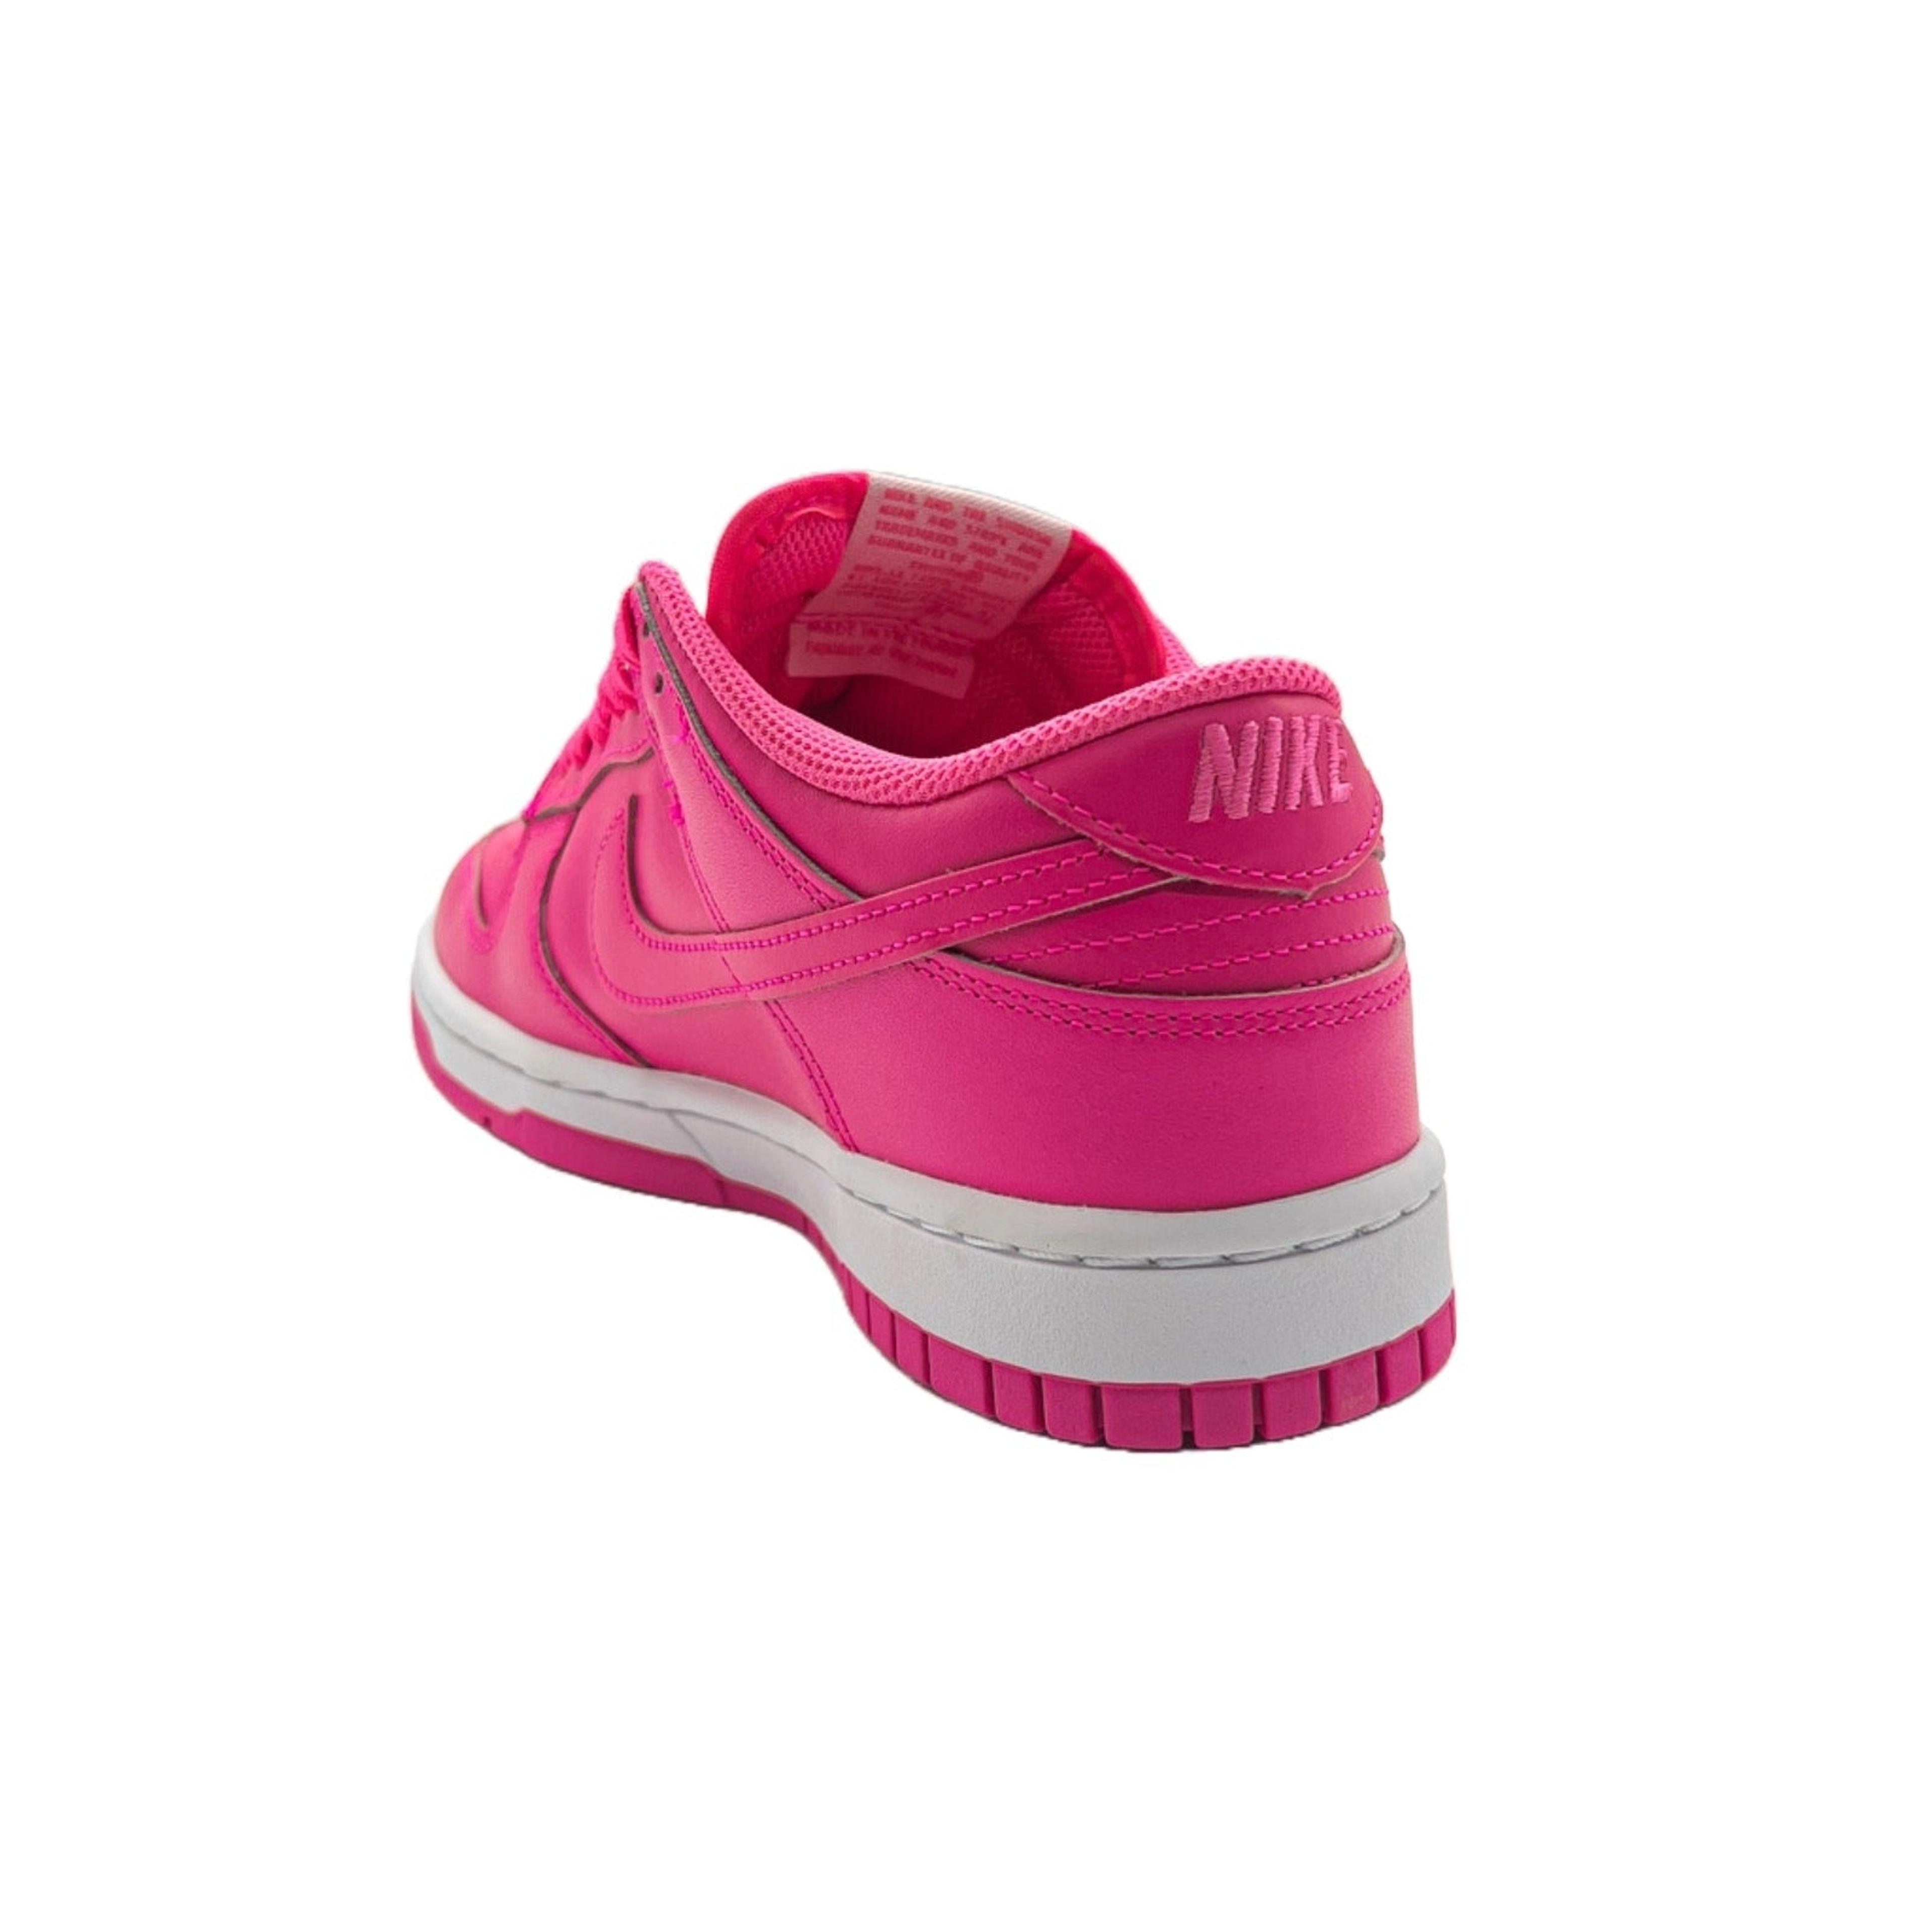 Alternate View 2 of Women's Nike Dunk Low, Hyper Pink